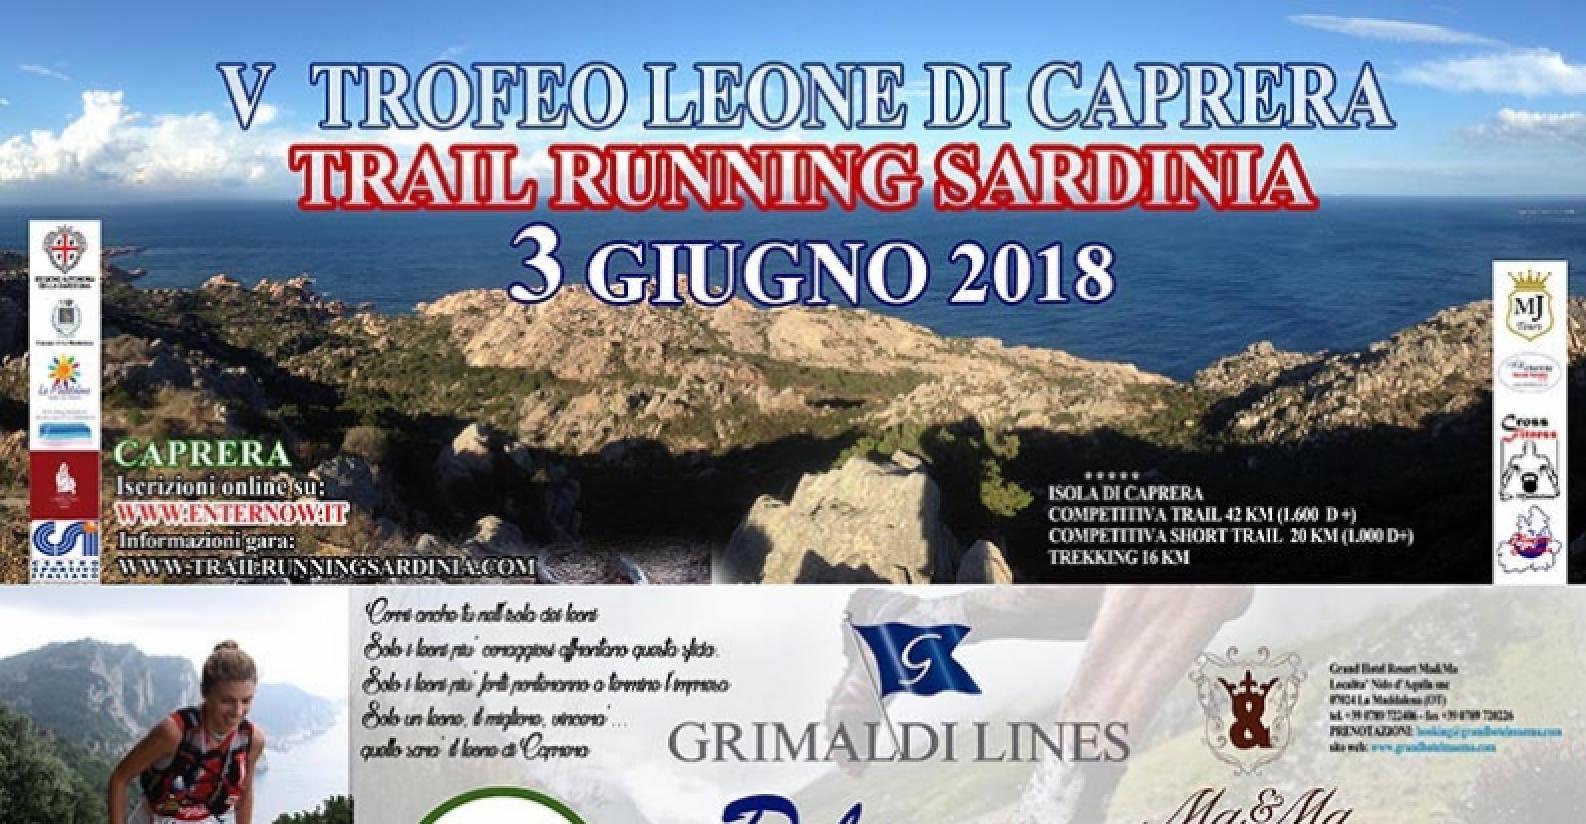 V Trofeo Leone di Caprera Trail Running Sardinia (locandina)